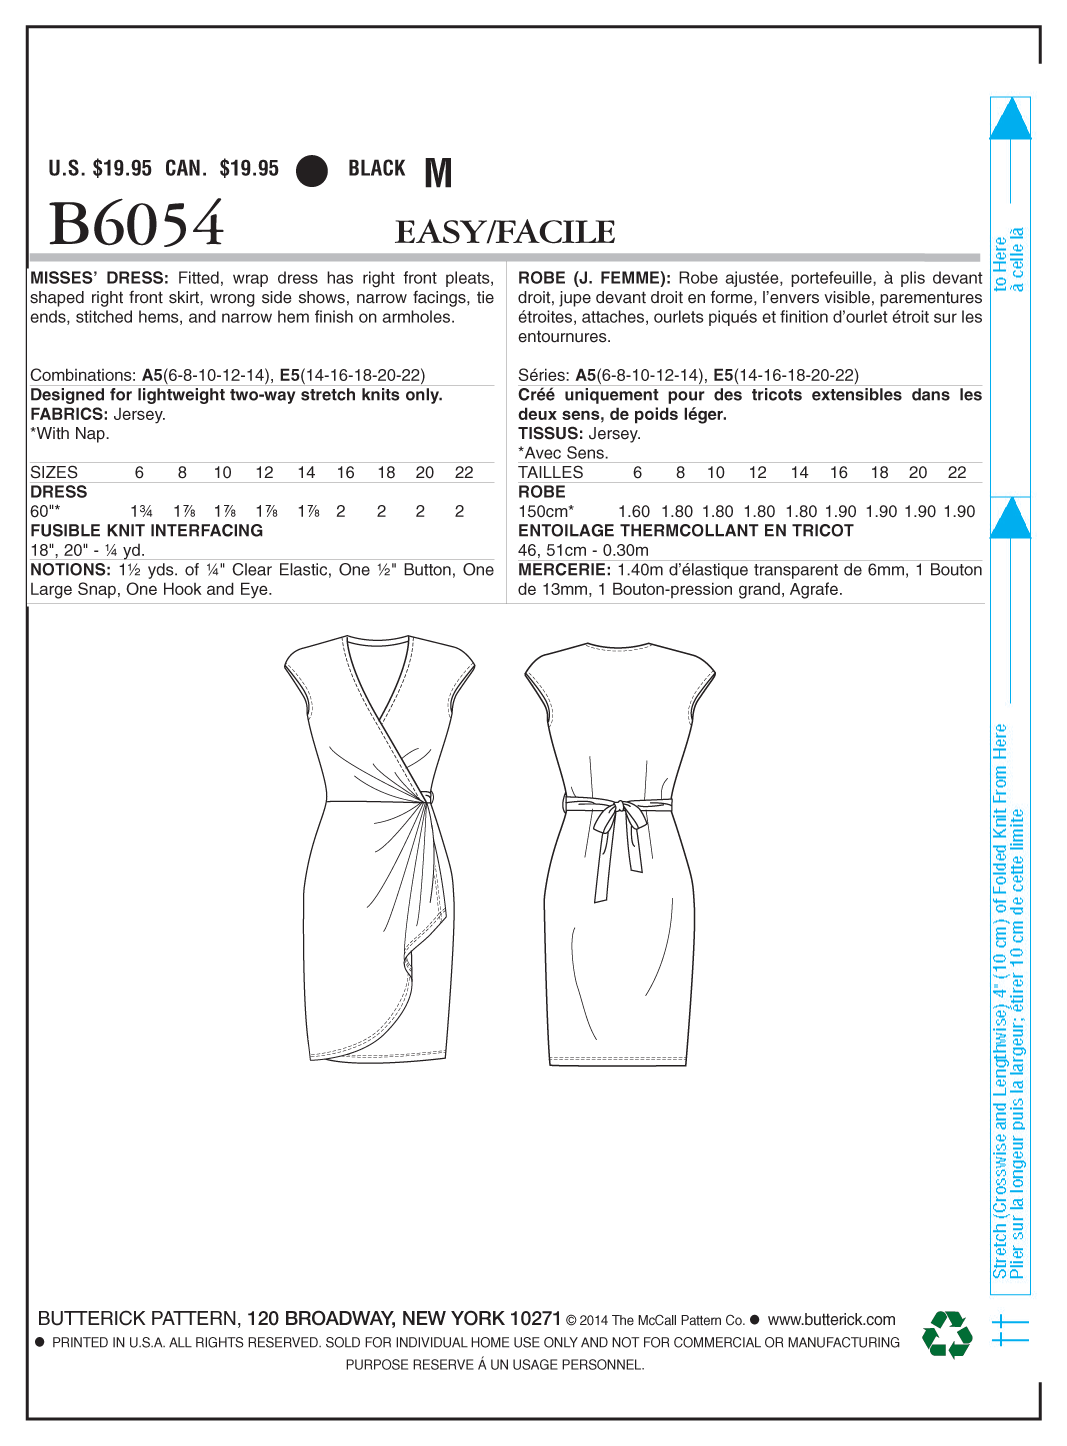 Butterick Sewing Pattern B6054 Misses' Dress